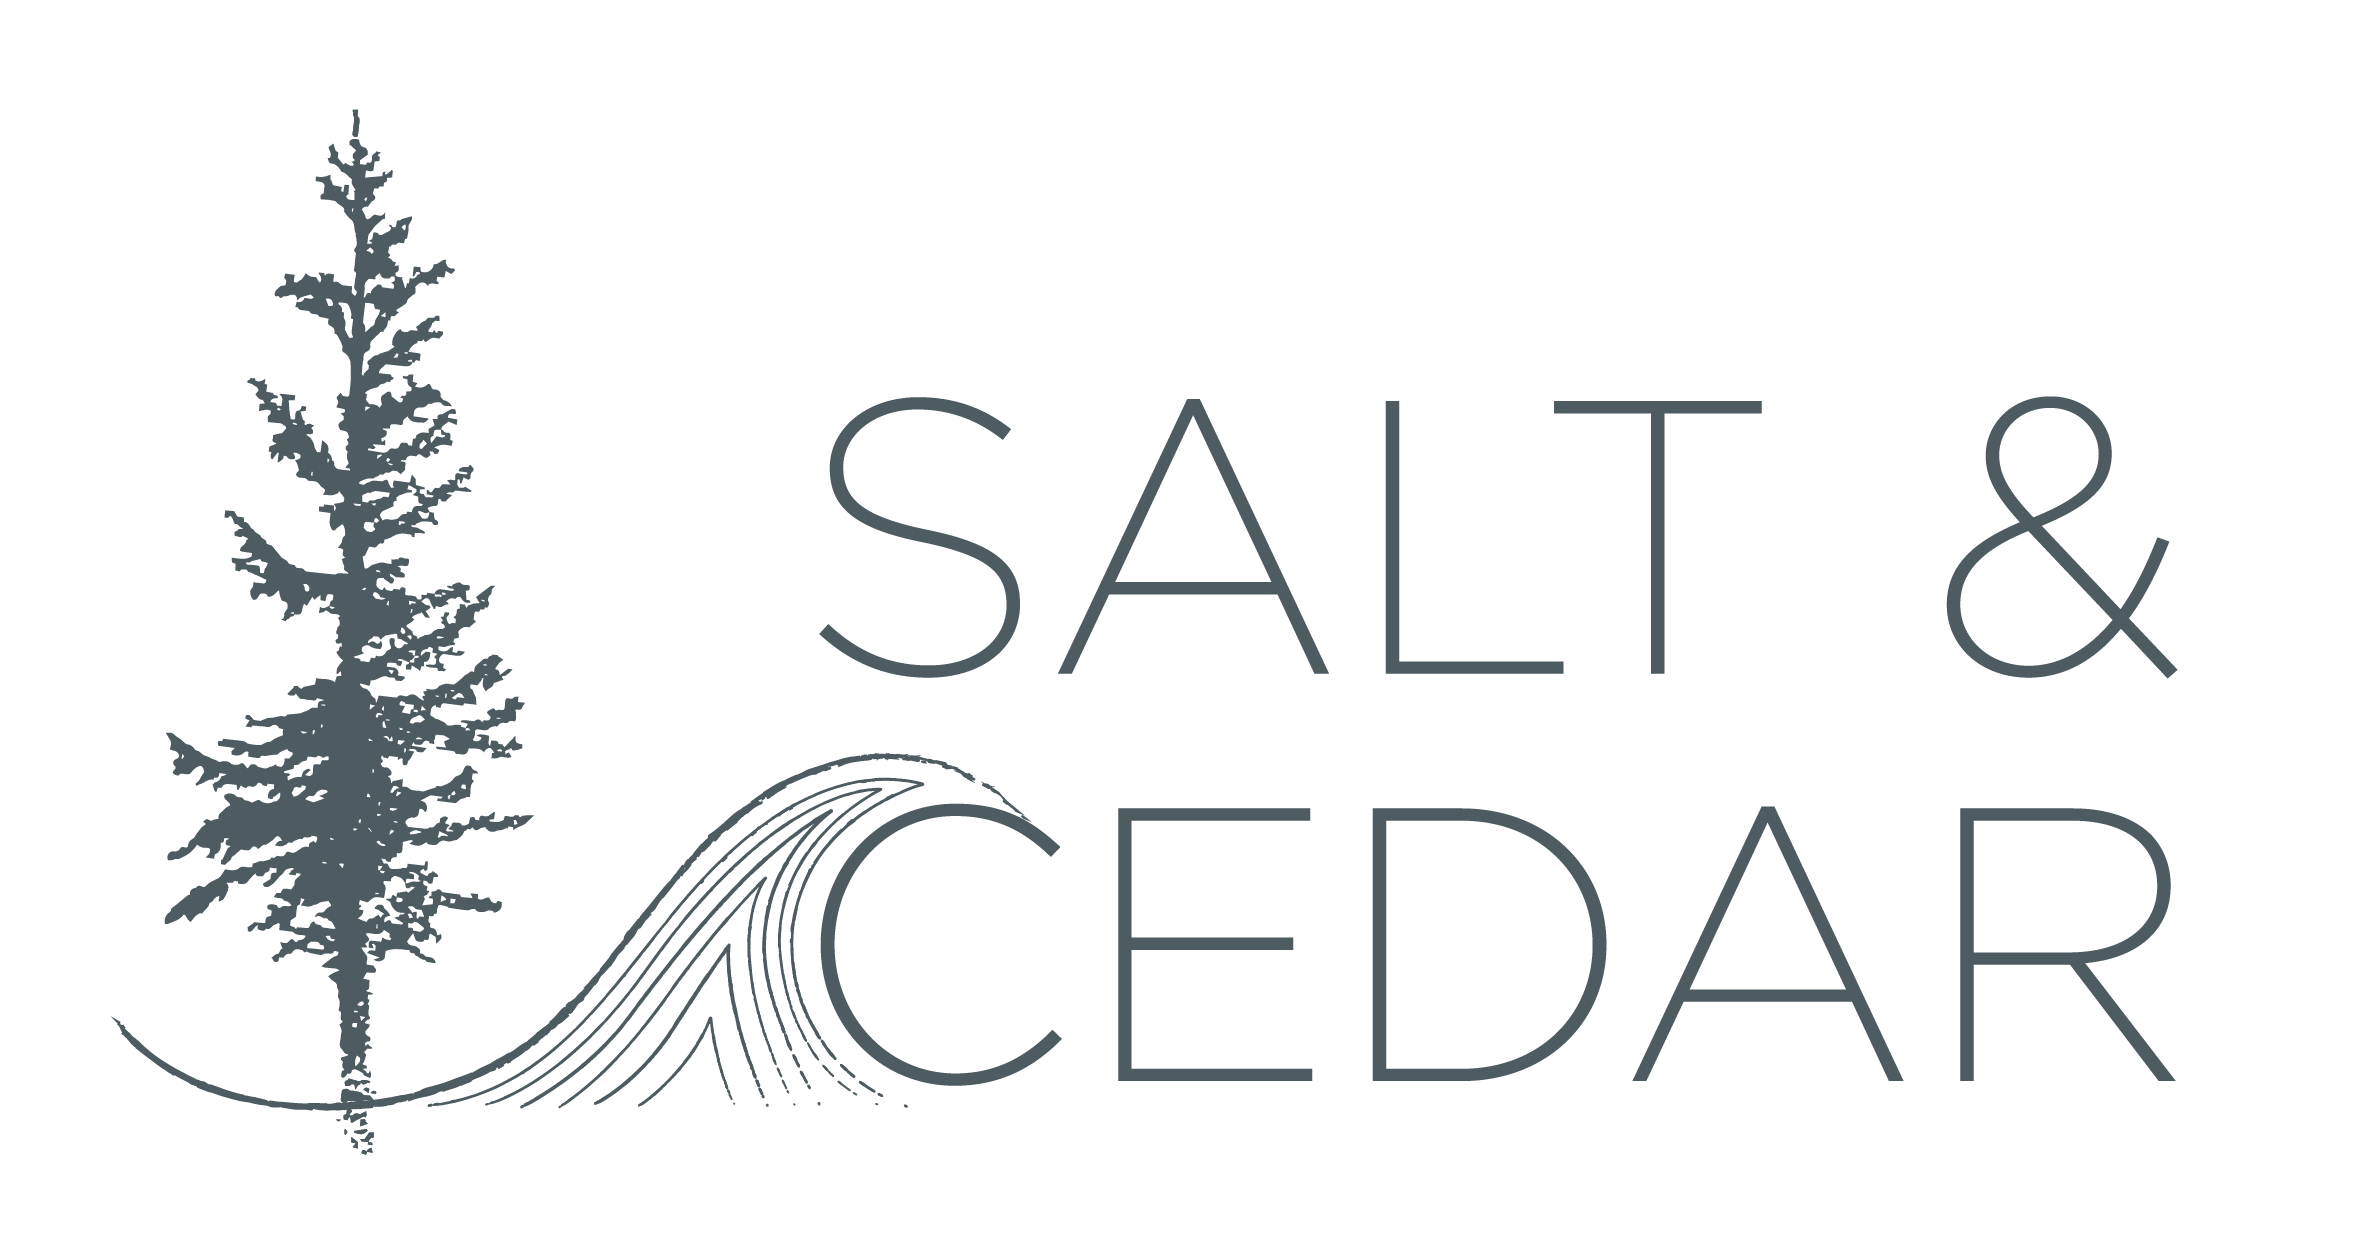 SALT AND CEDAR